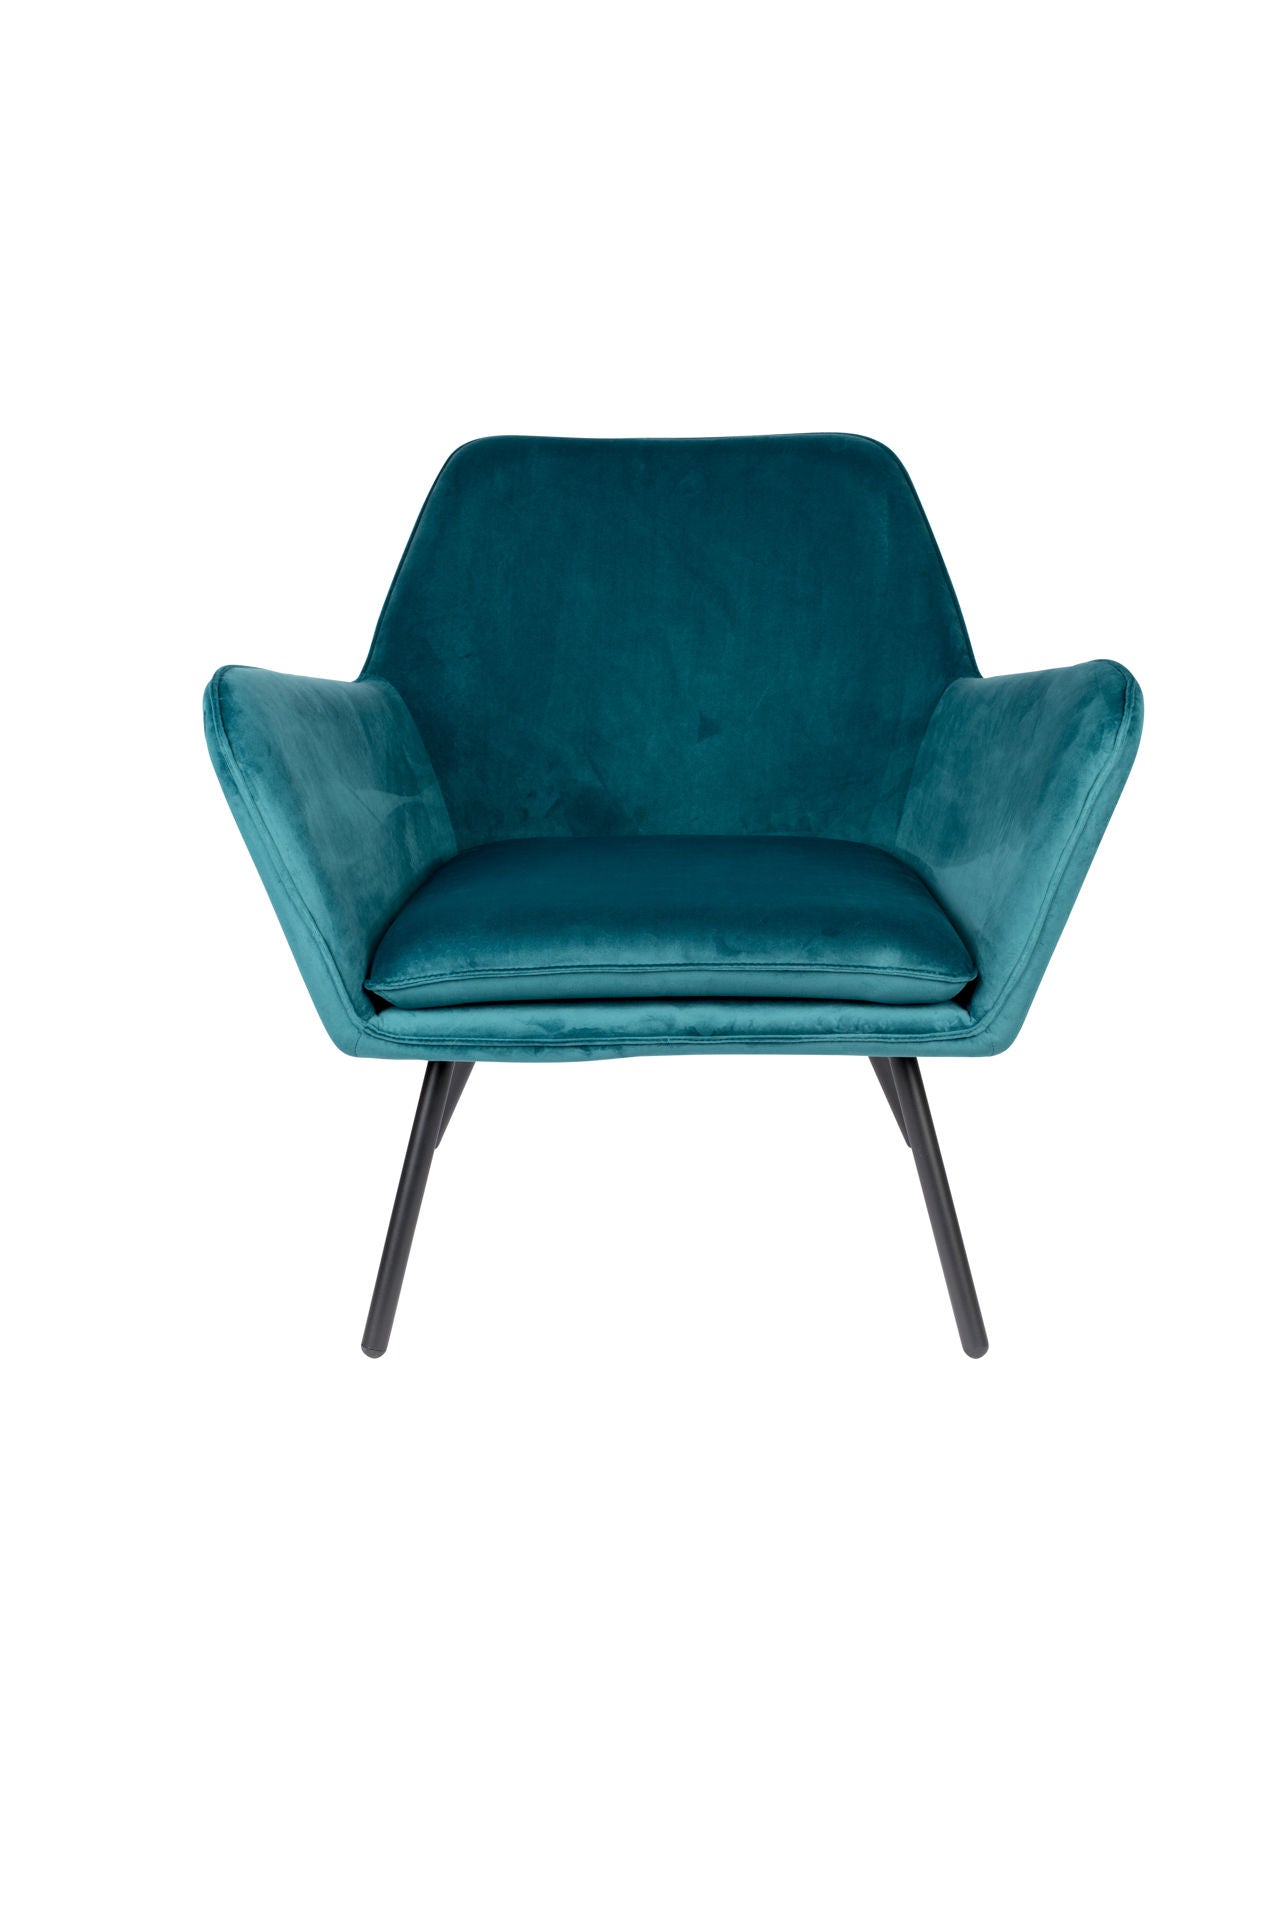 Nancy's Florida City Lounge Chair - Industrial - Blue- Velvet, Iron, Plywood - 76 cm x 80 cm x 78 cm